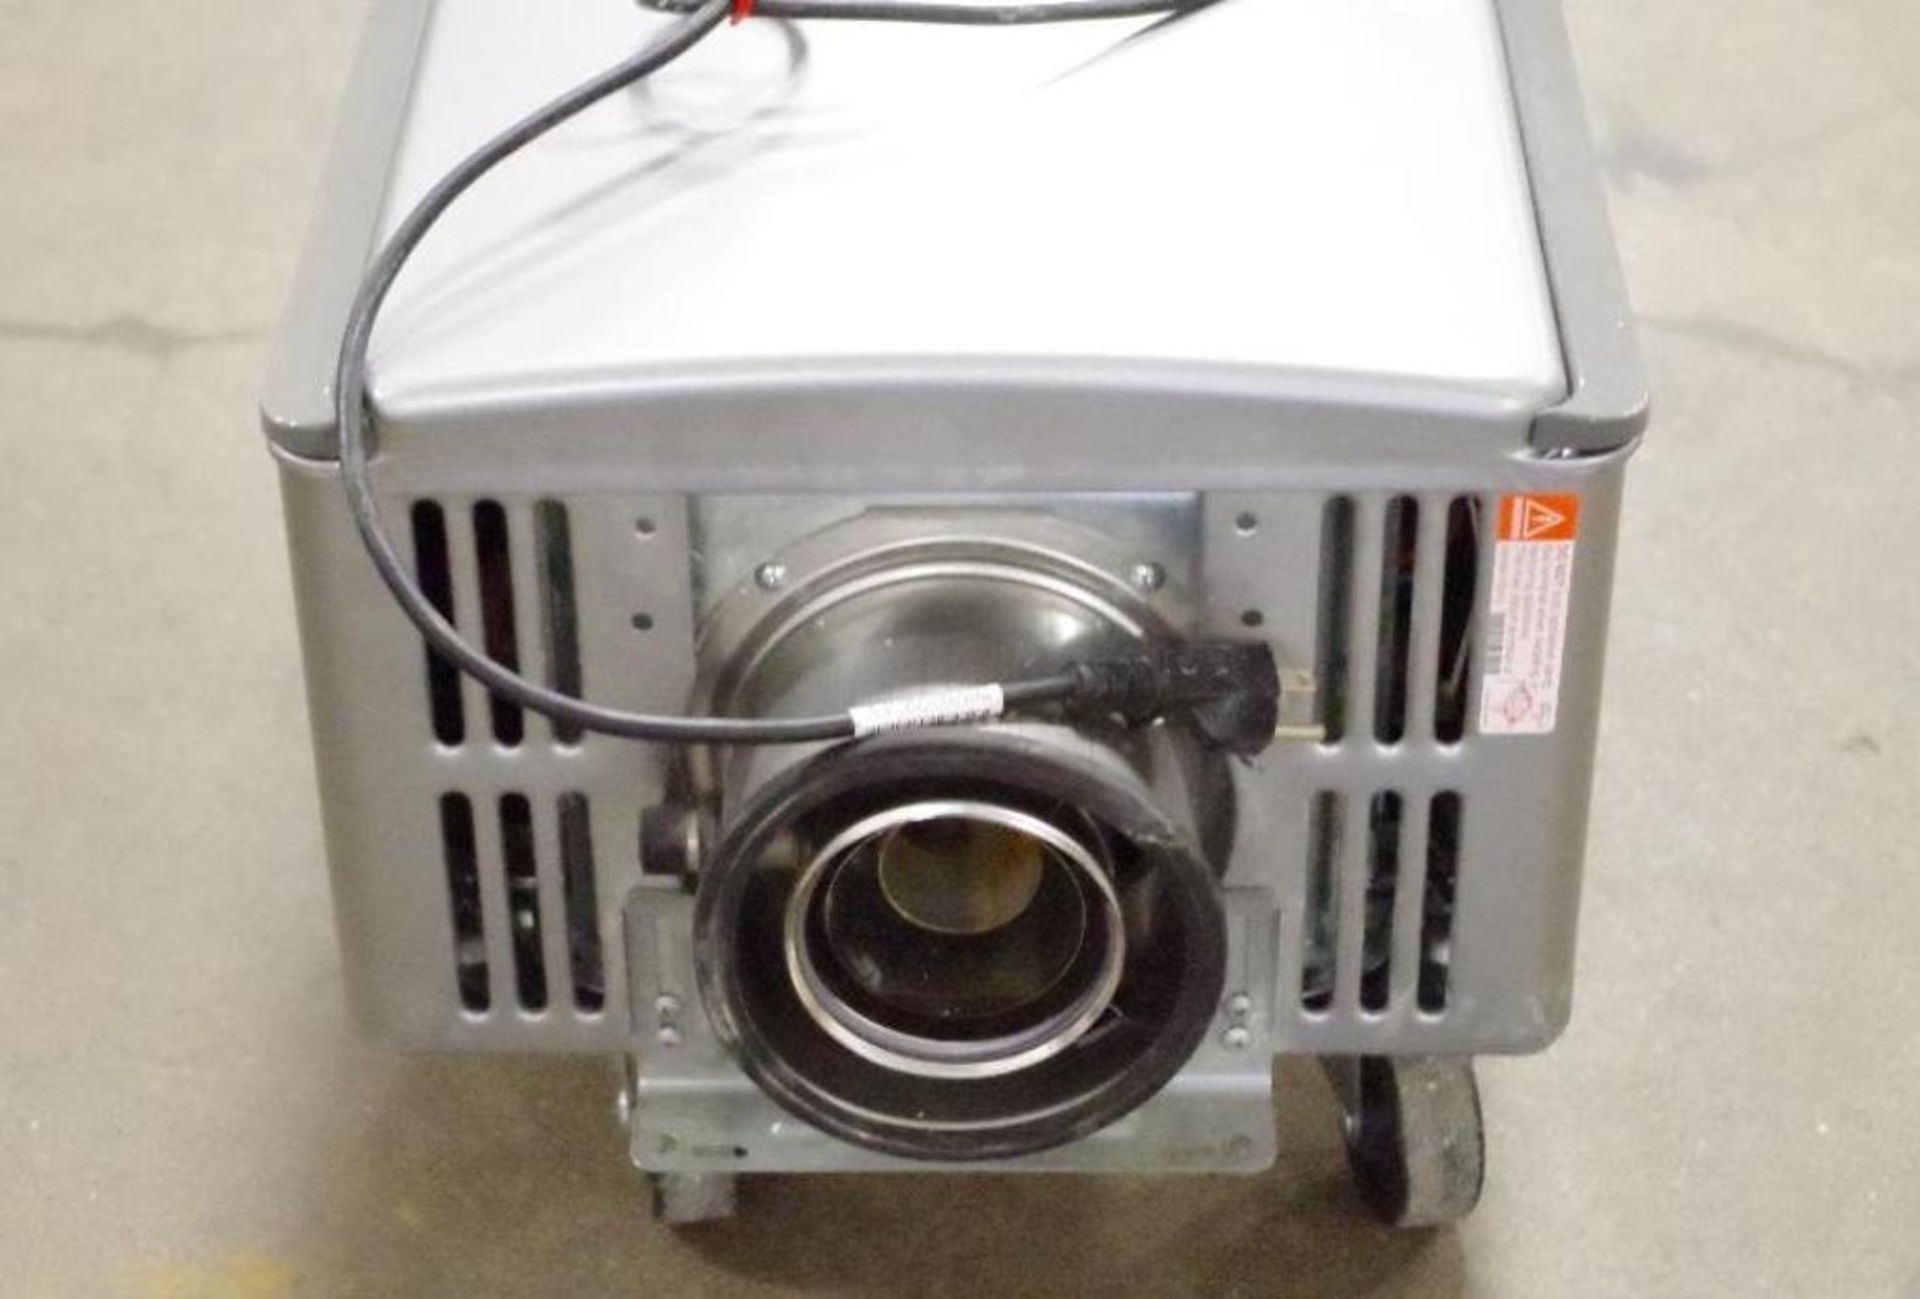 RINNAI Tankless Water Heater, 119,000 BTUs, Gas M/N R94I - Image 3 of 6